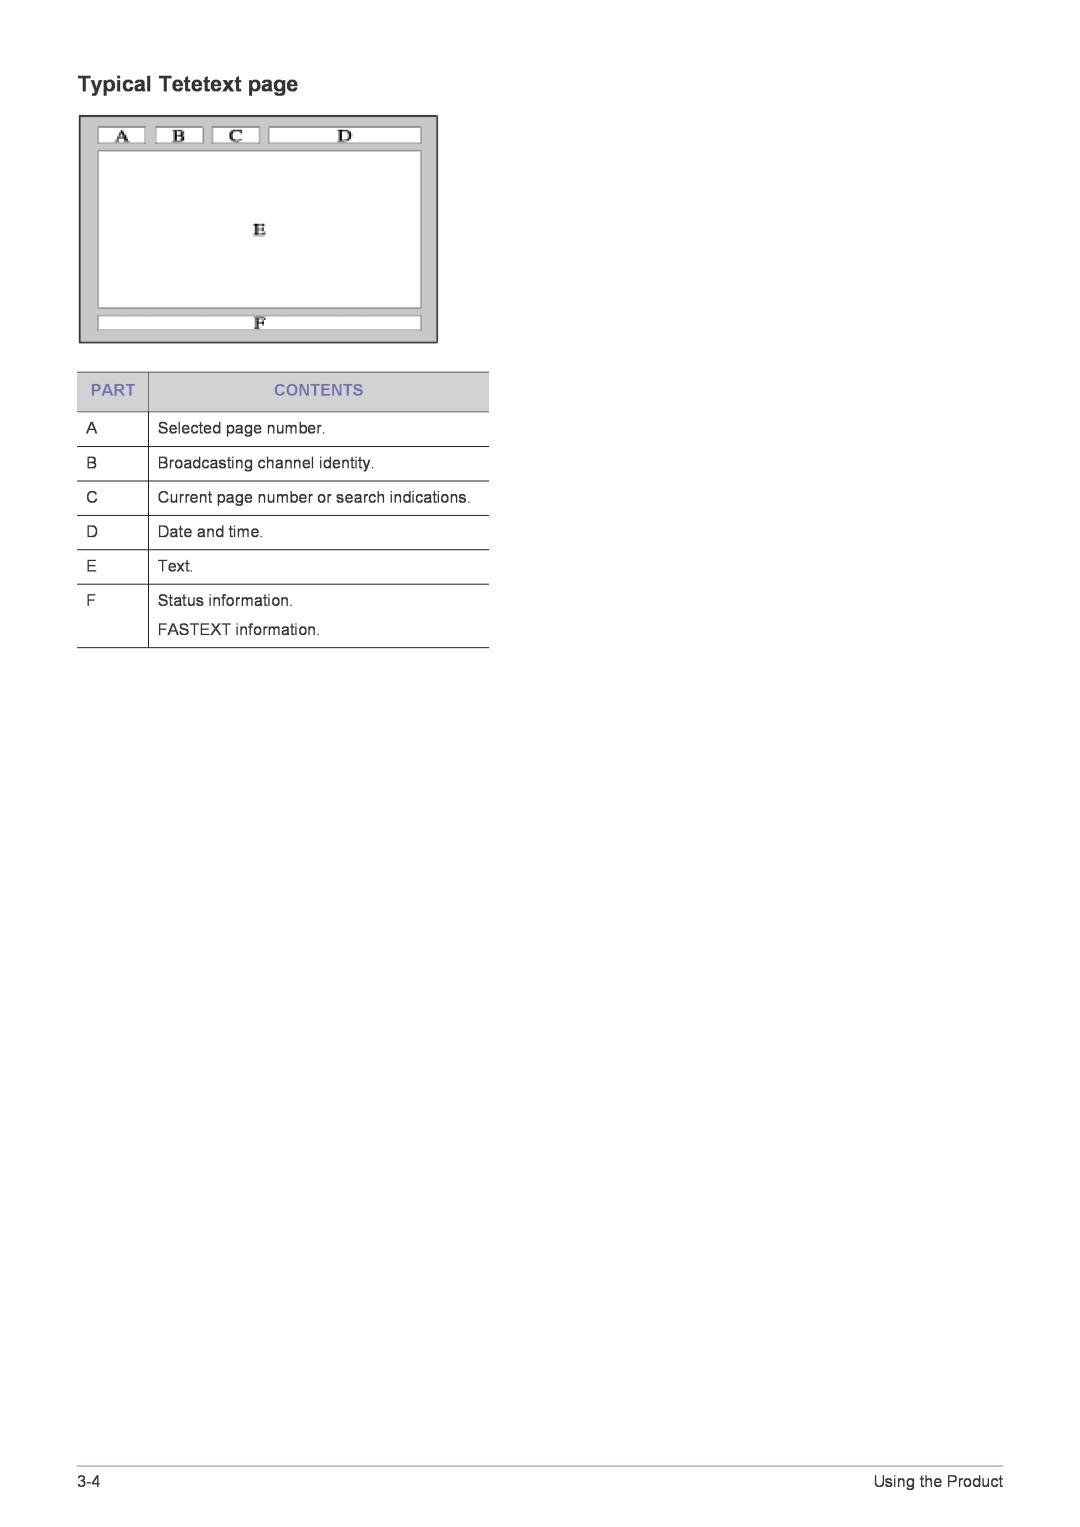 Samsung B1930HD, B2330HD, B2430HD, B2230HD, B2030HD user manual Typical Tetetext page 